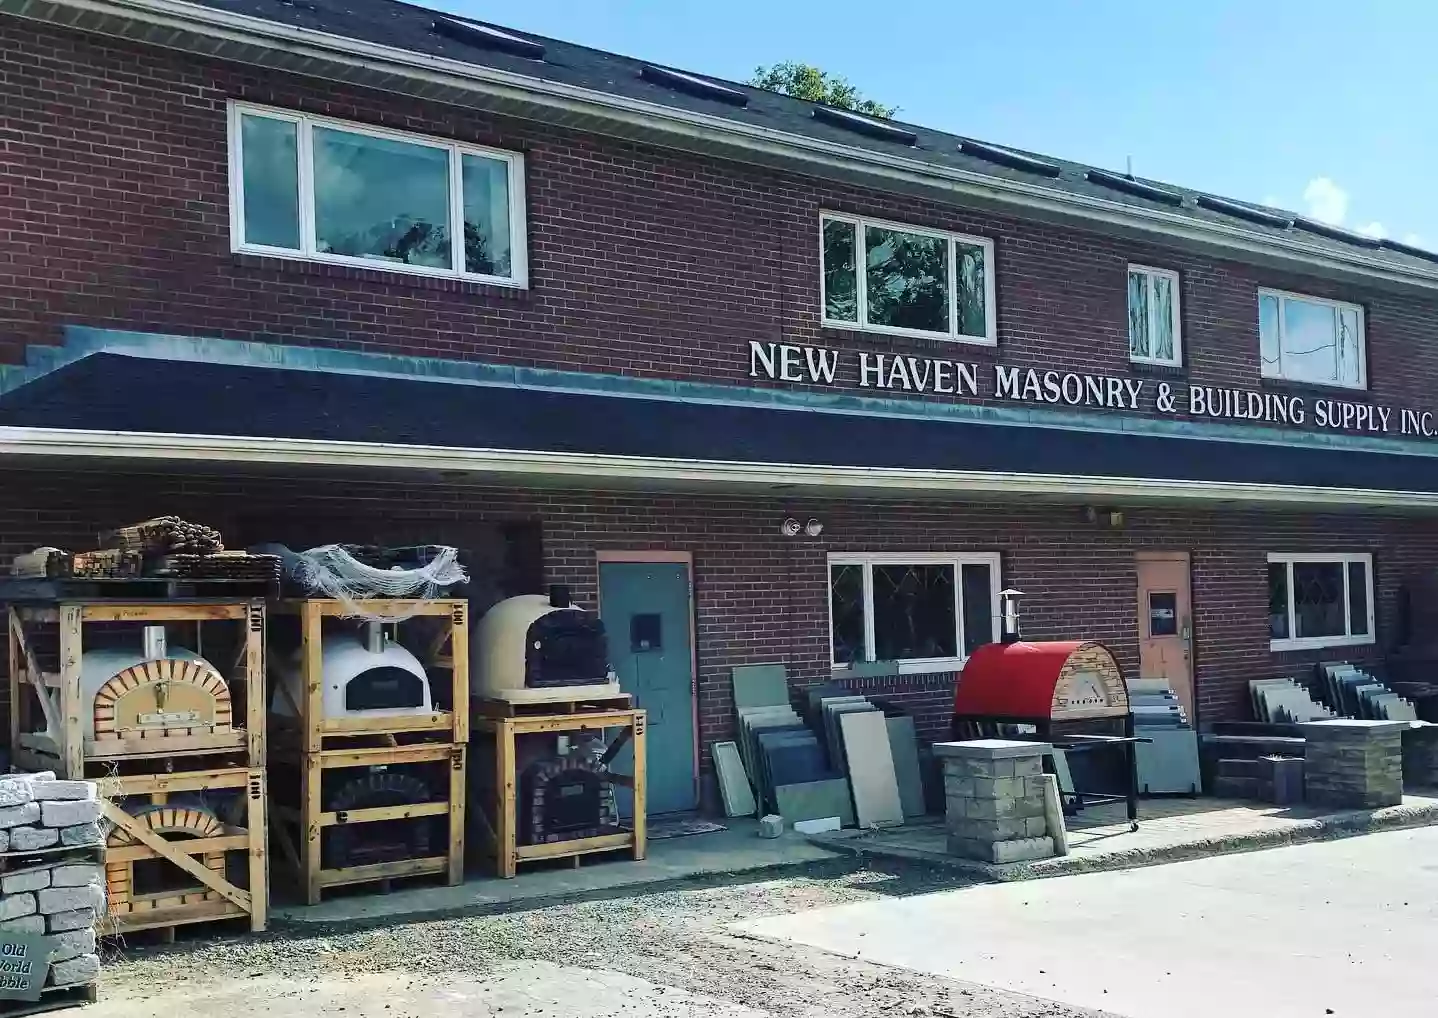 New Haven Masonry & Building Supply Inc